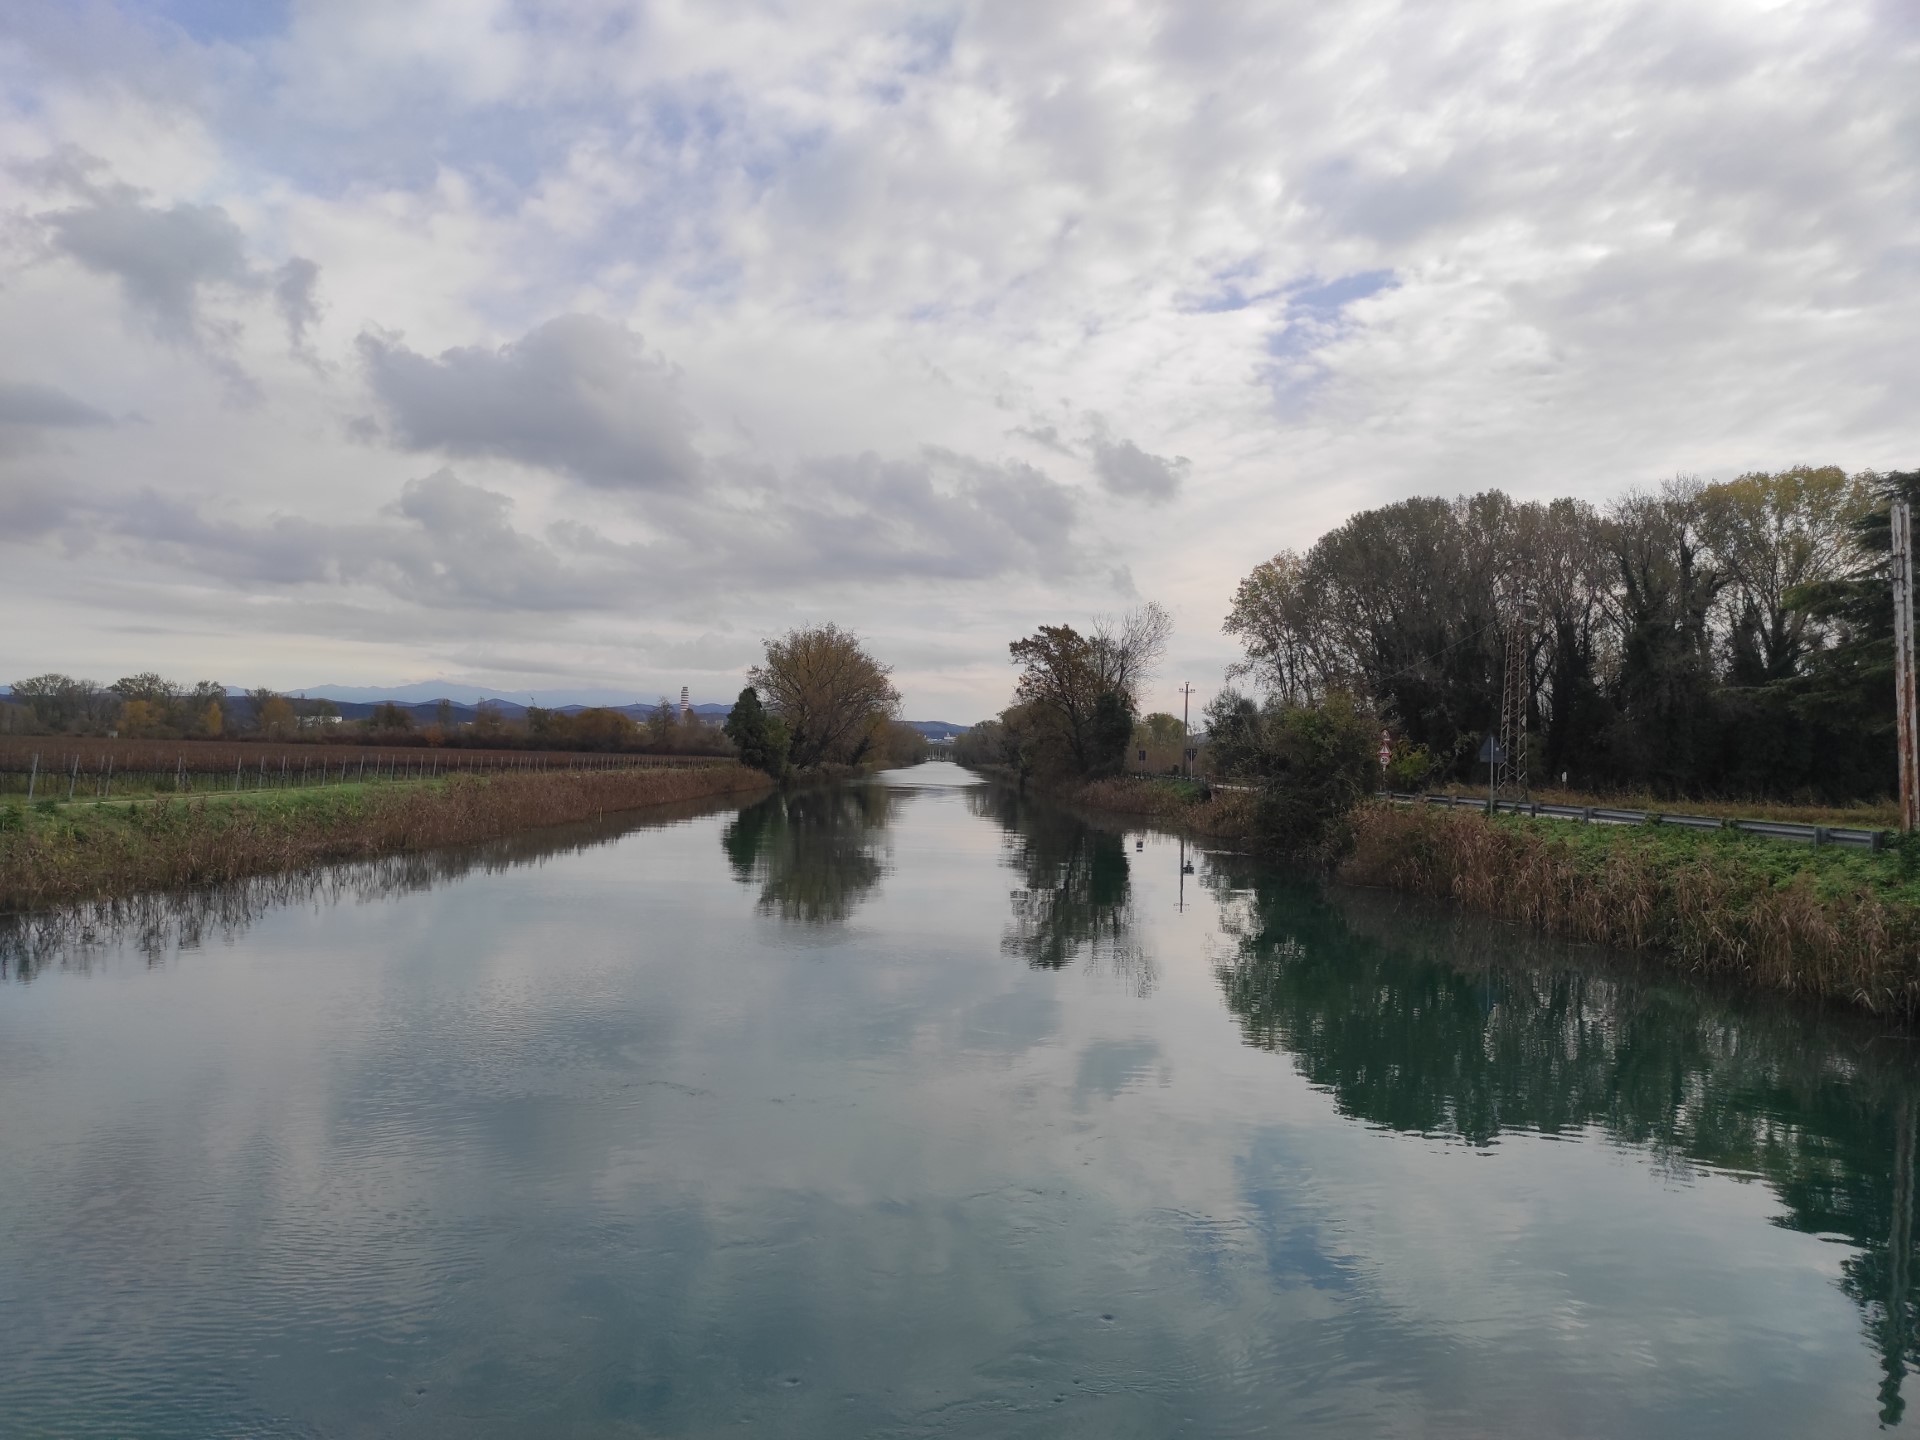 Staranzano - Paesaggi tra terra ed acqua - Isonzo XR